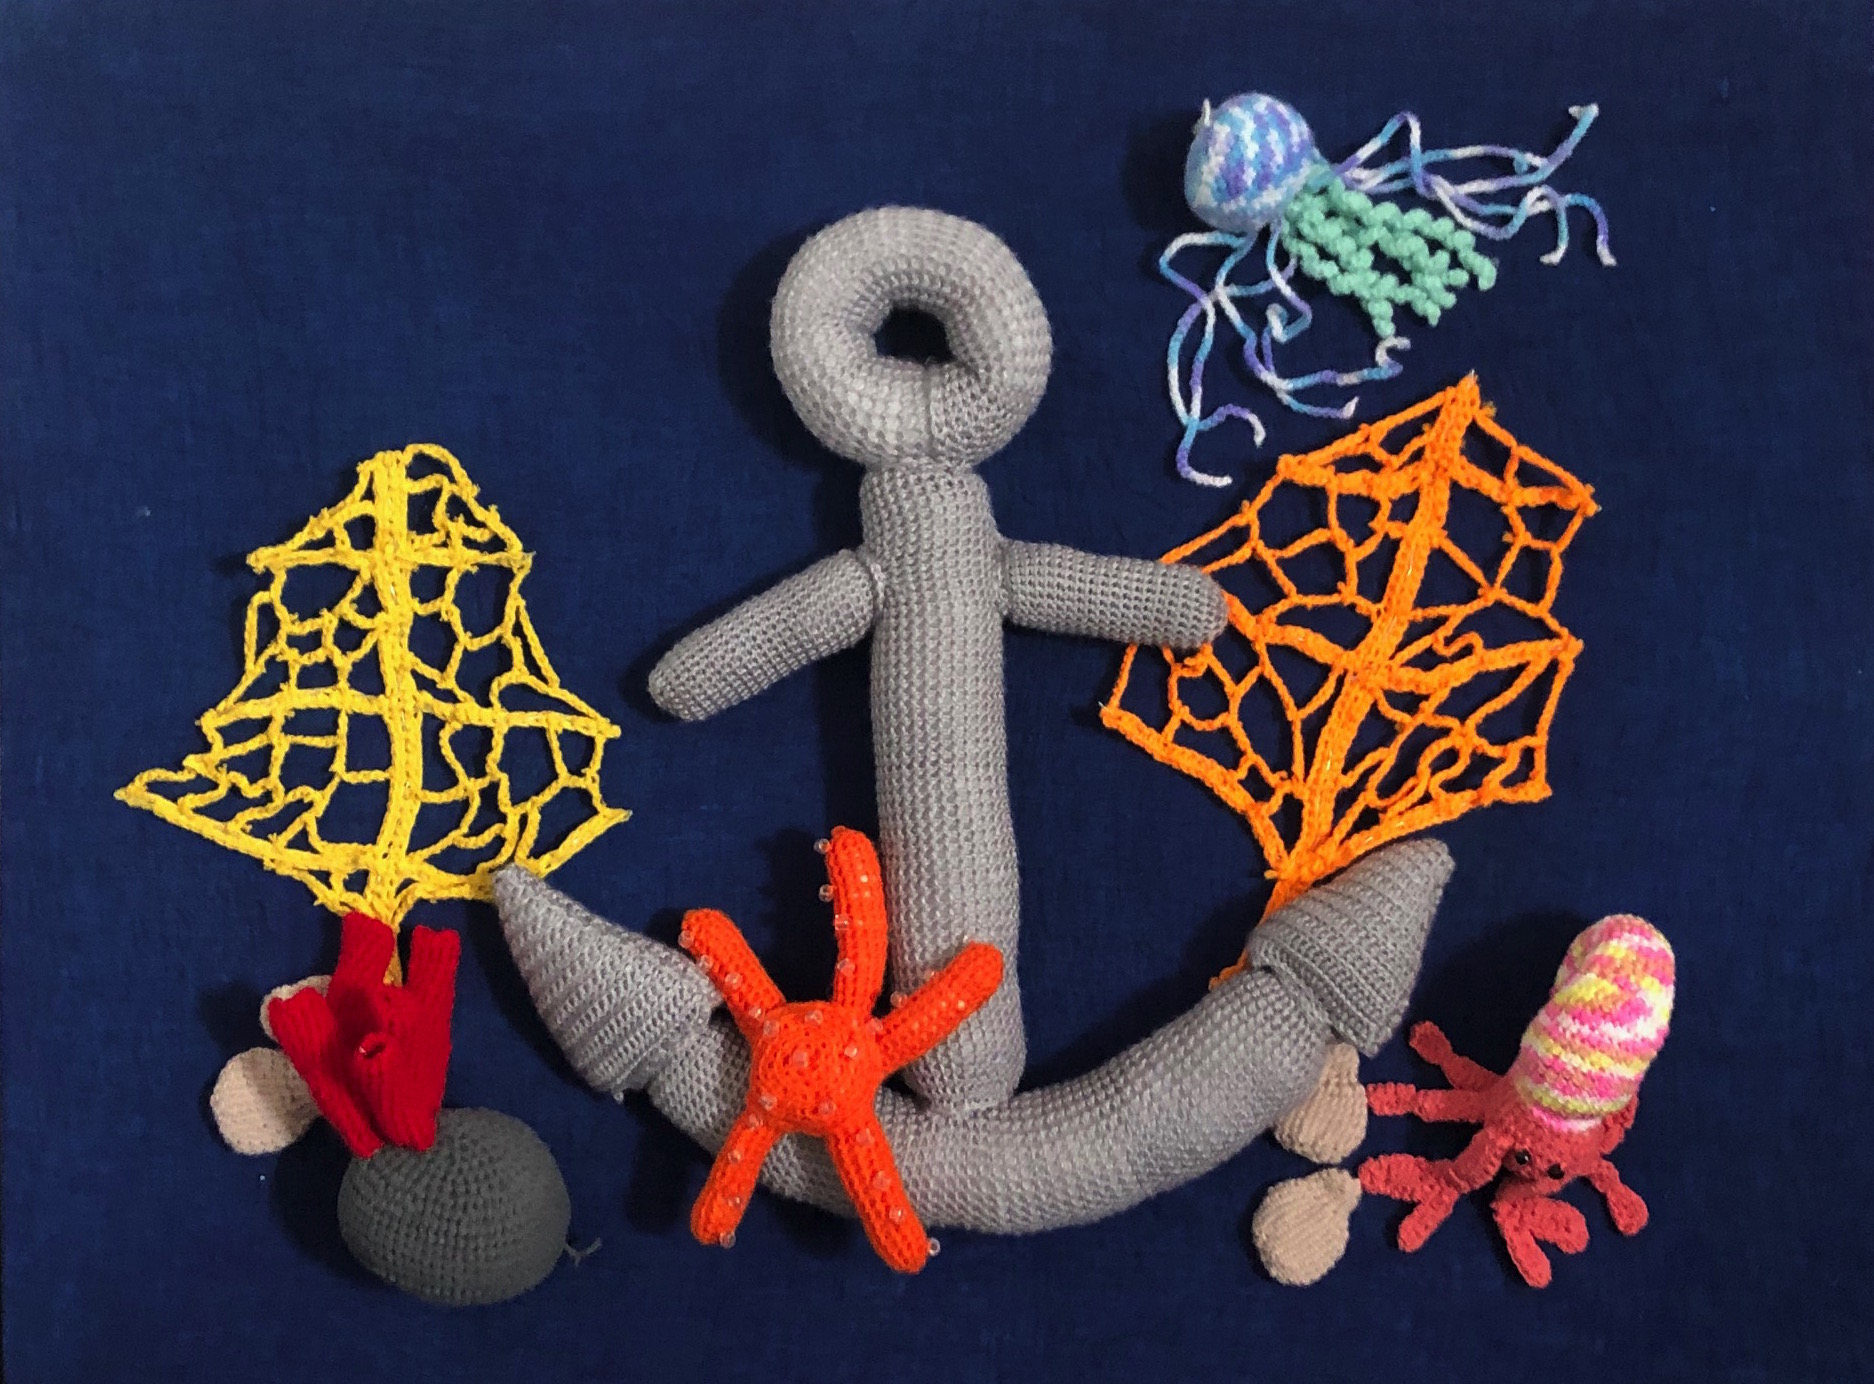 Landscape of sea themed crochet sculptures